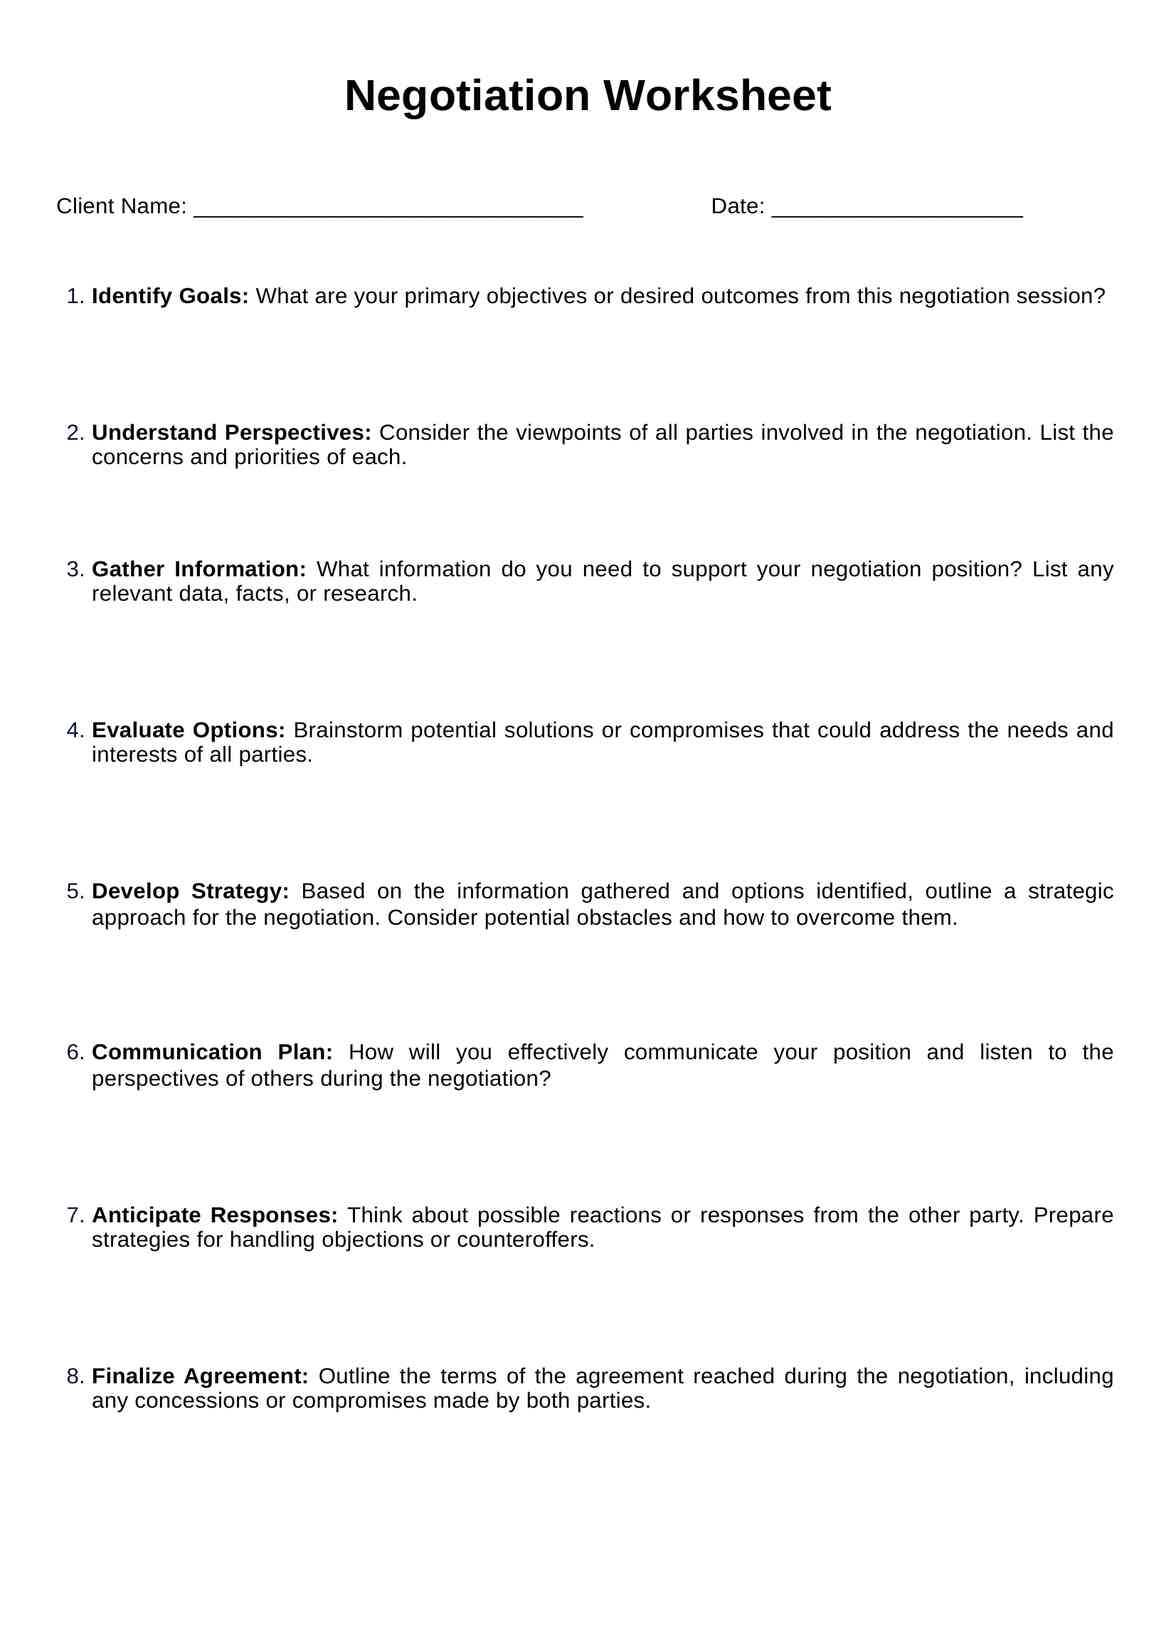 Negotiation Worksheets PDF Example